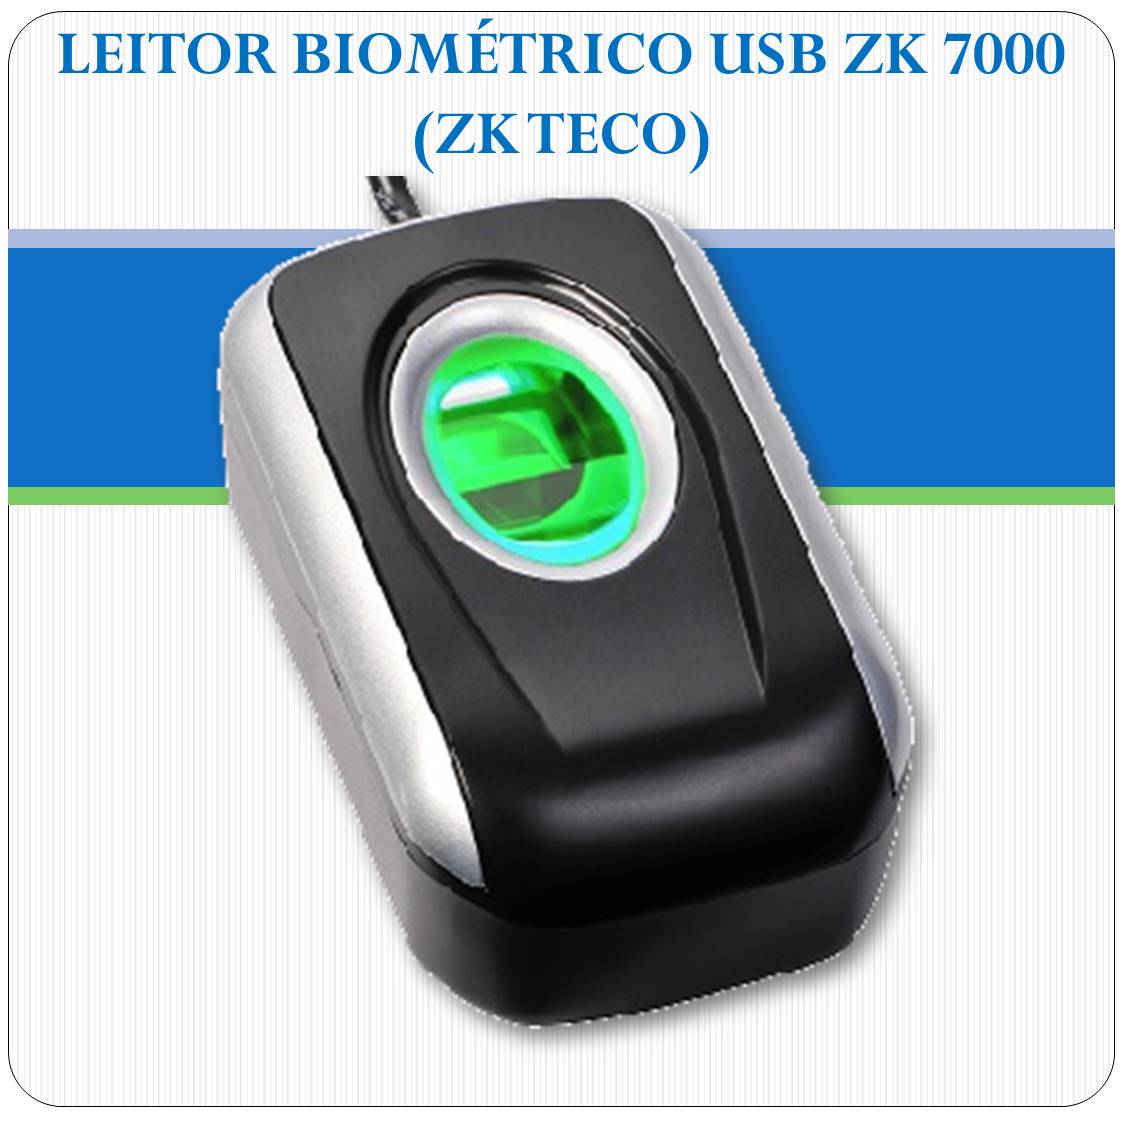 Leitor Biométrico USB - U7000 32bits